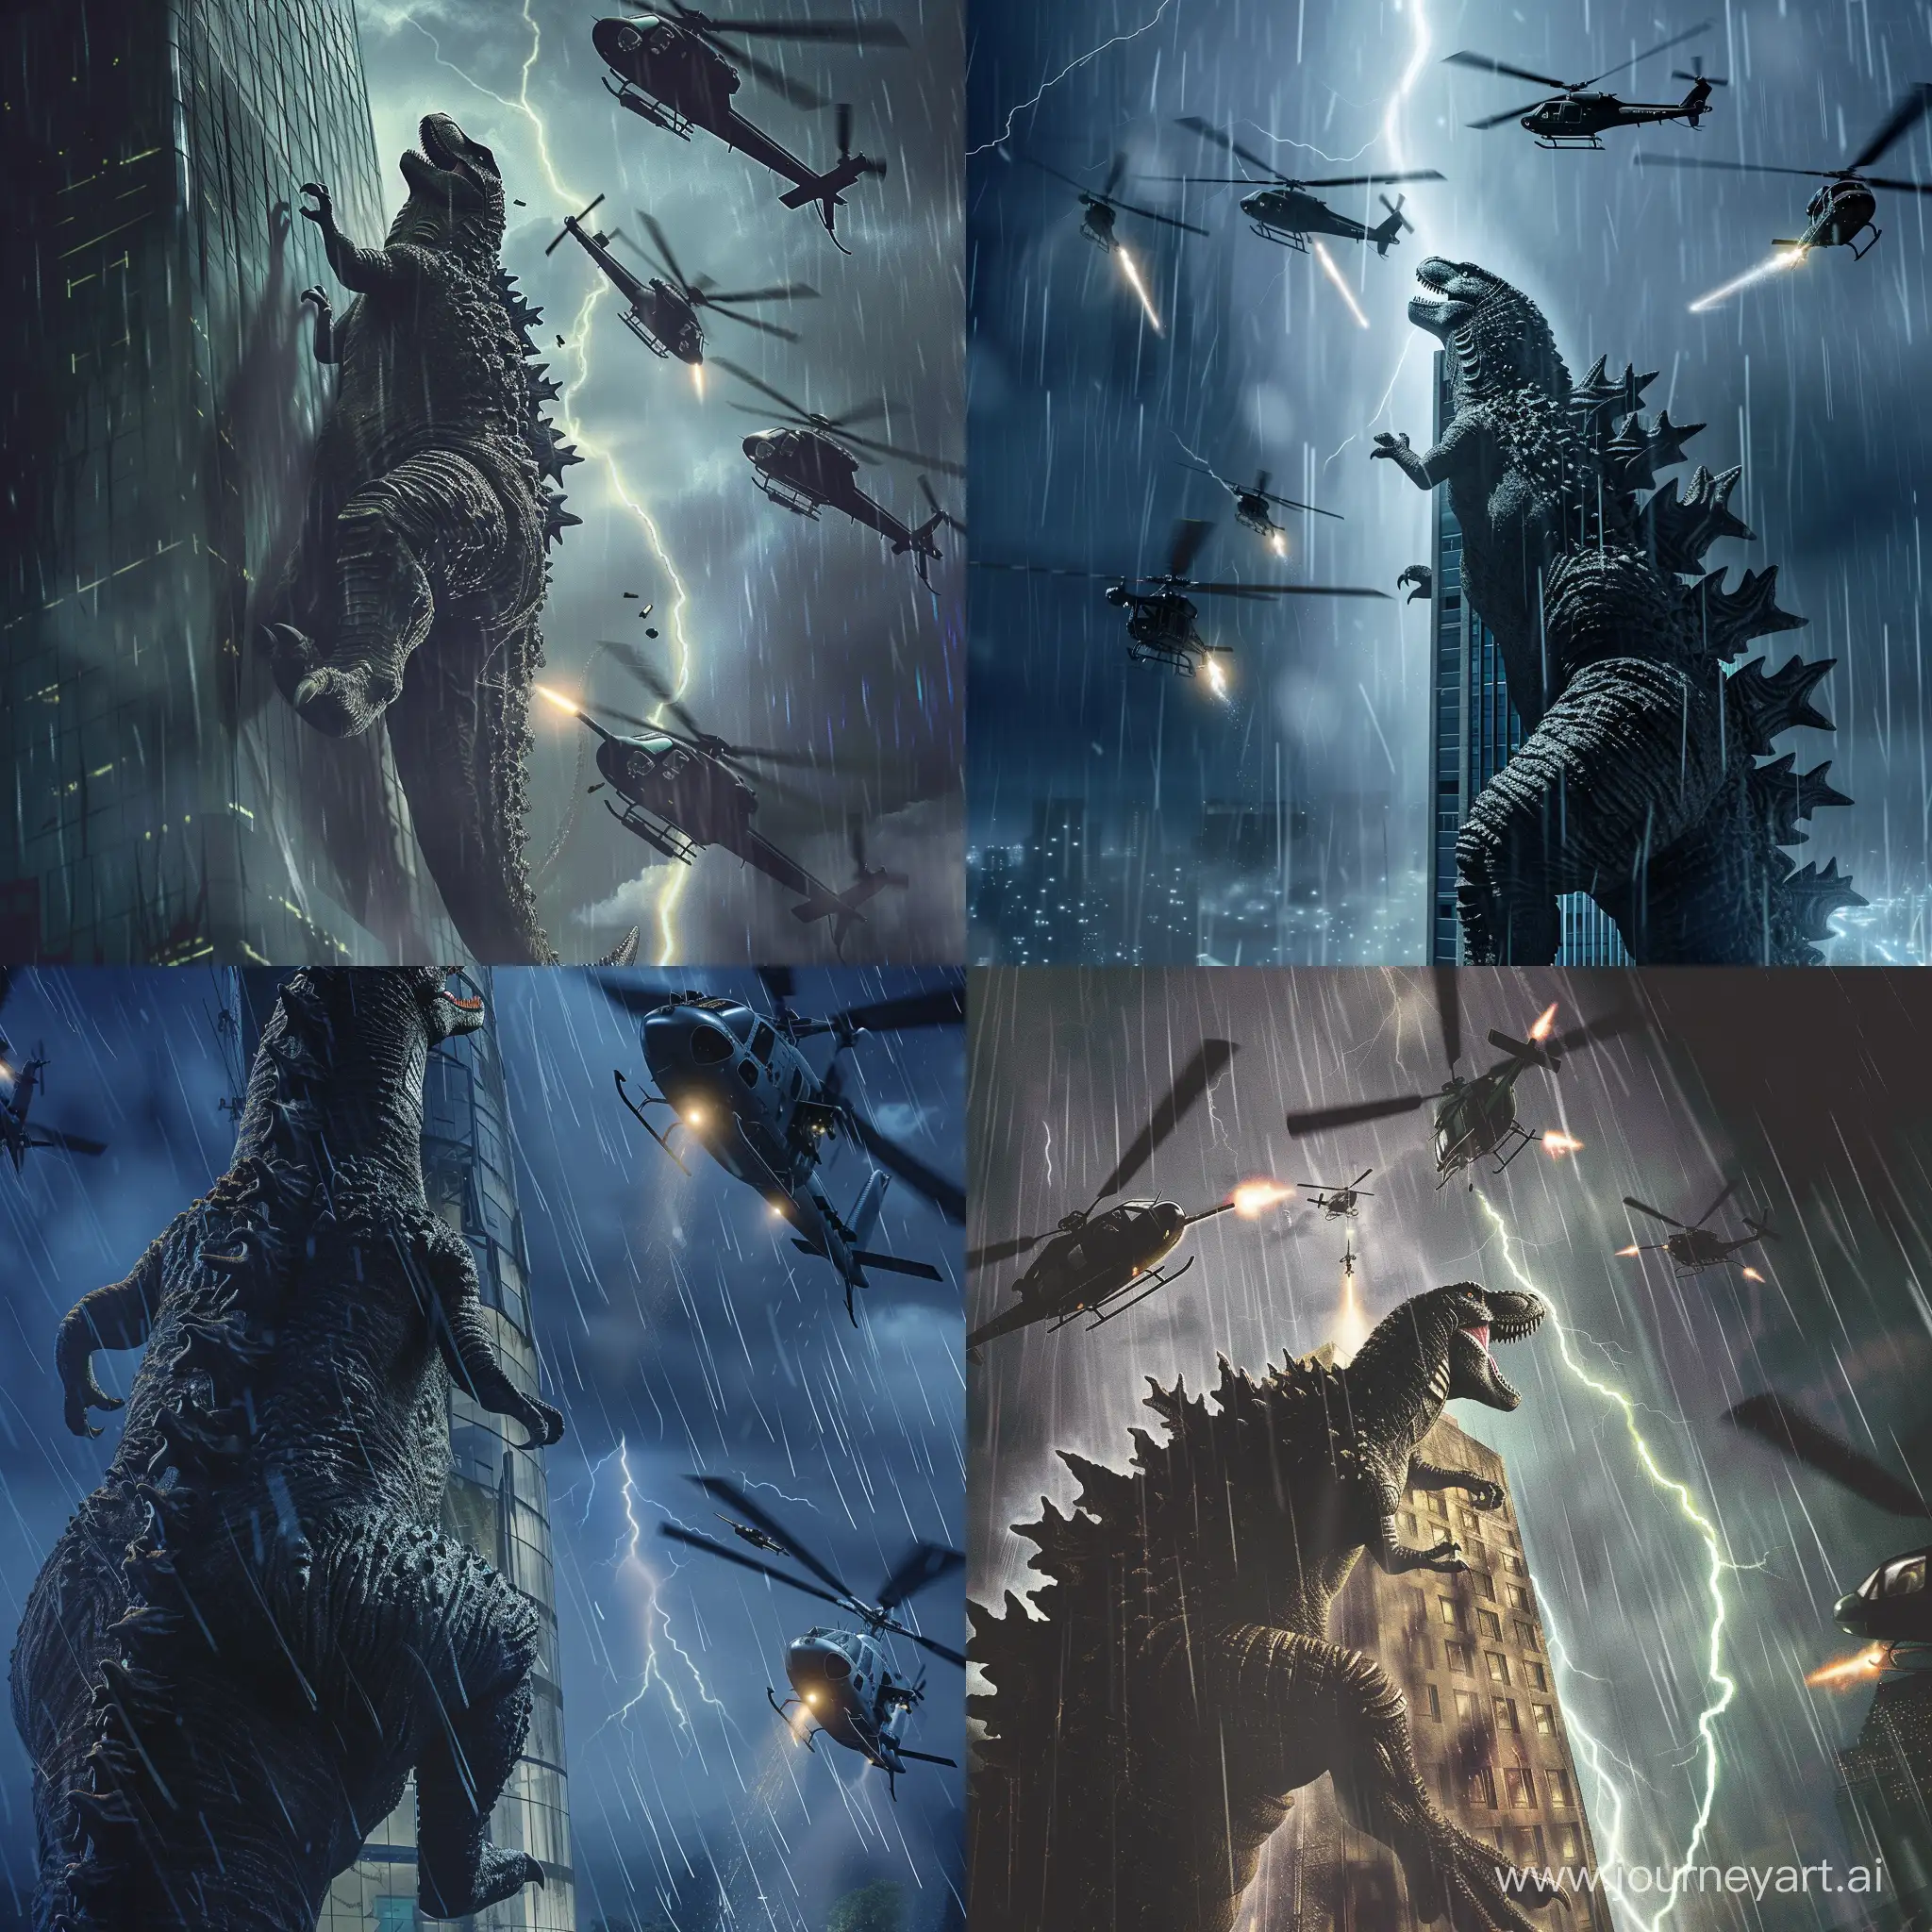 Godzillasaurus Rex climbing a tall building , night , rain, army helicopters buzzing around him shooting guns, lightning , cinematic